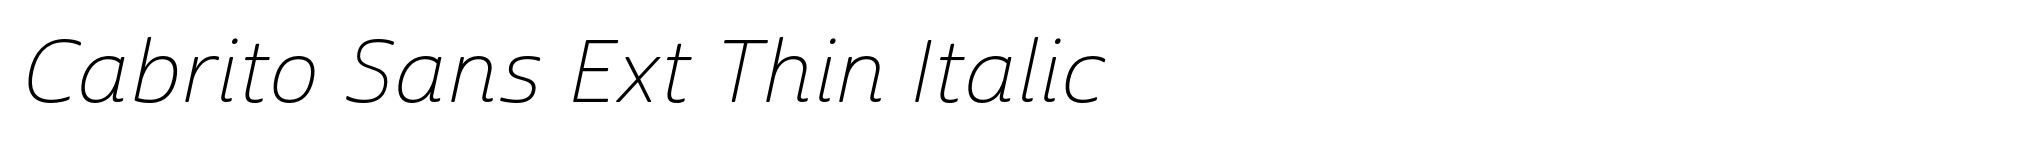 Cabrito Sans Ext Thin Italic image